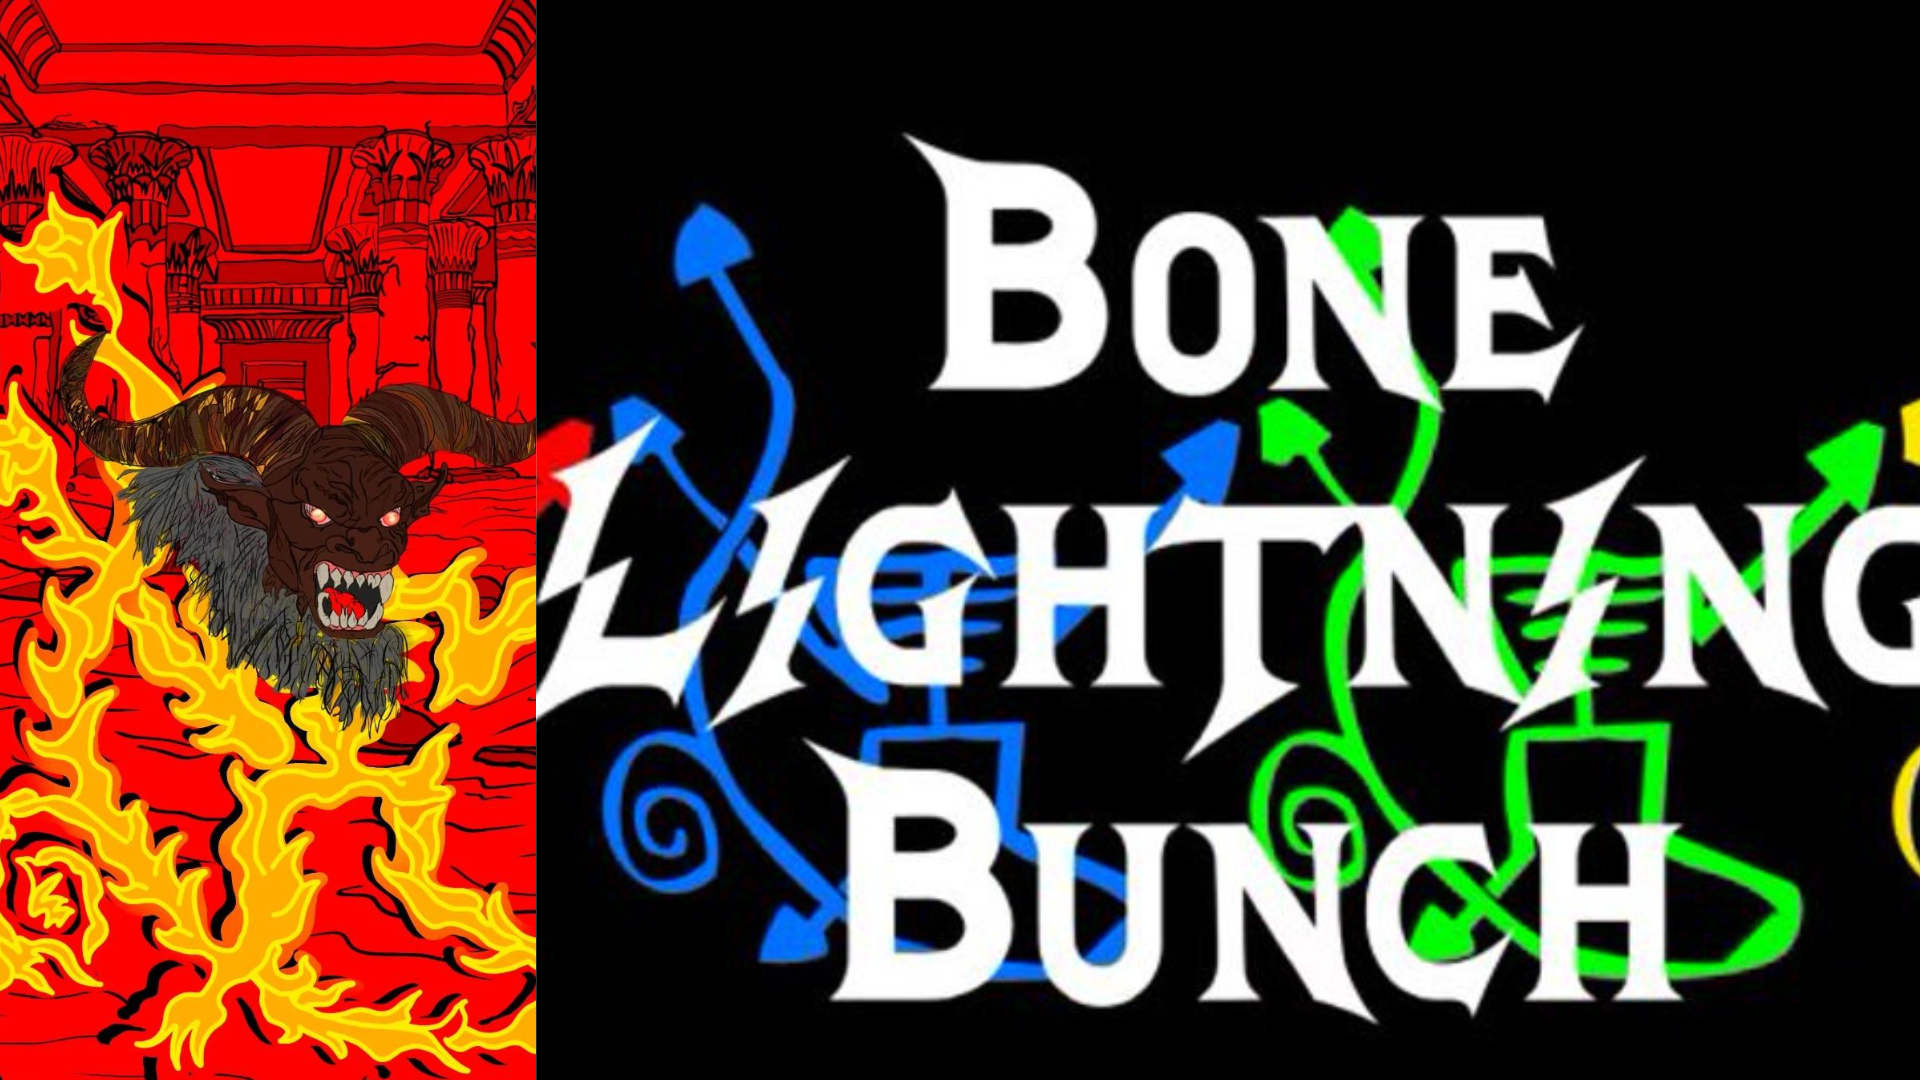 Bone Lightning Bunch NFT project artwork and logos